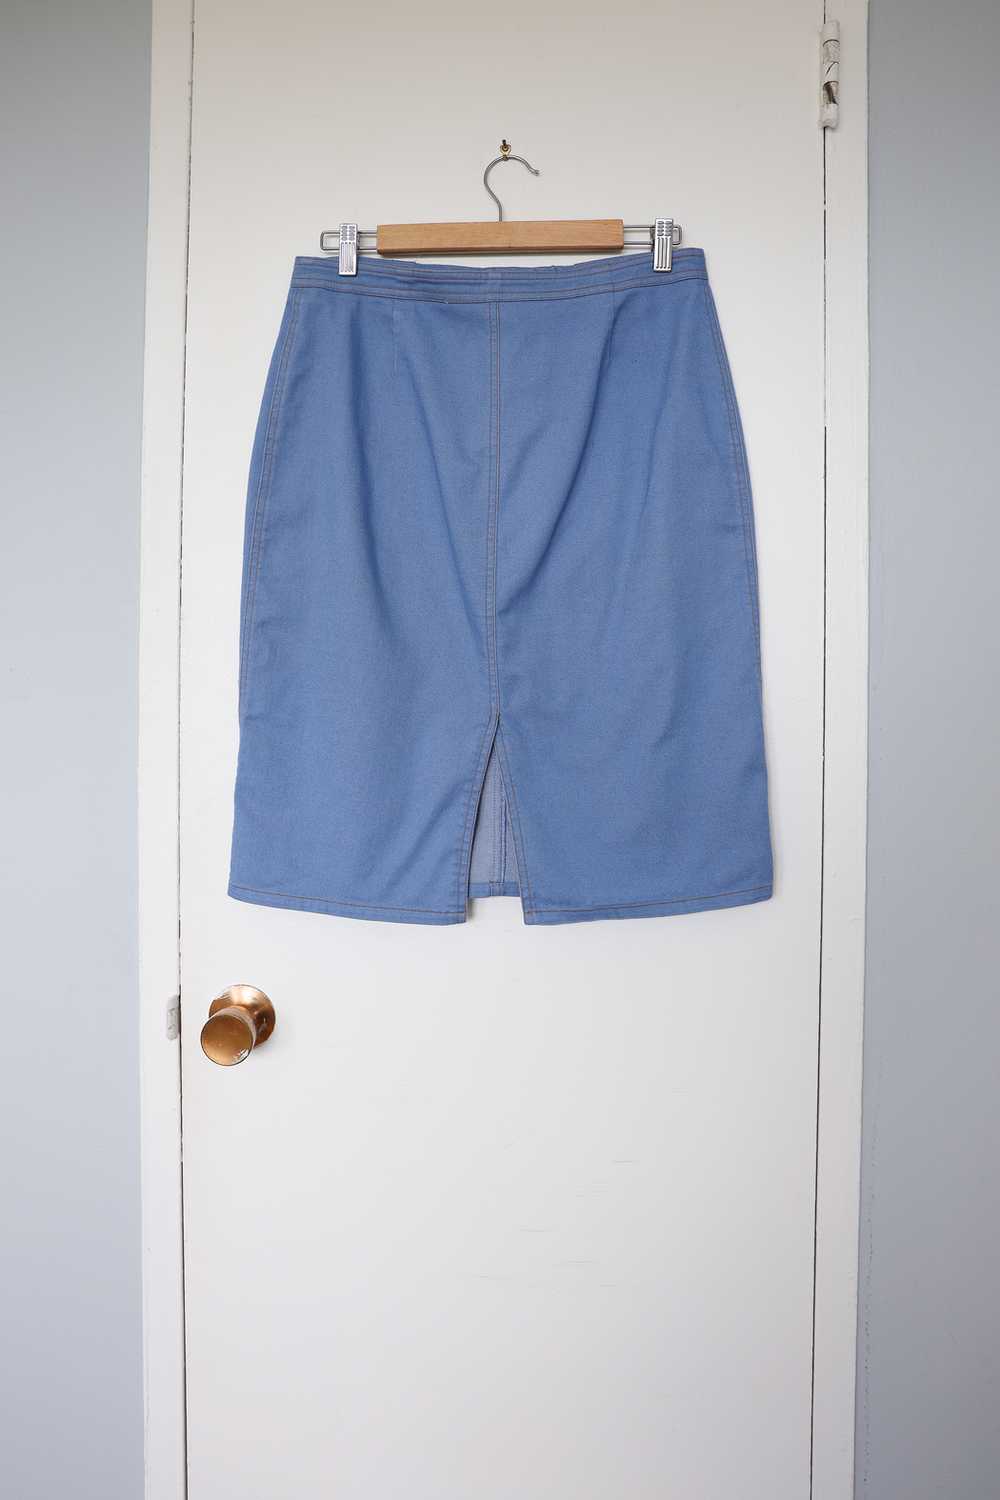 Cornflower Blue Pencil Skirt / Size 8 - image 8